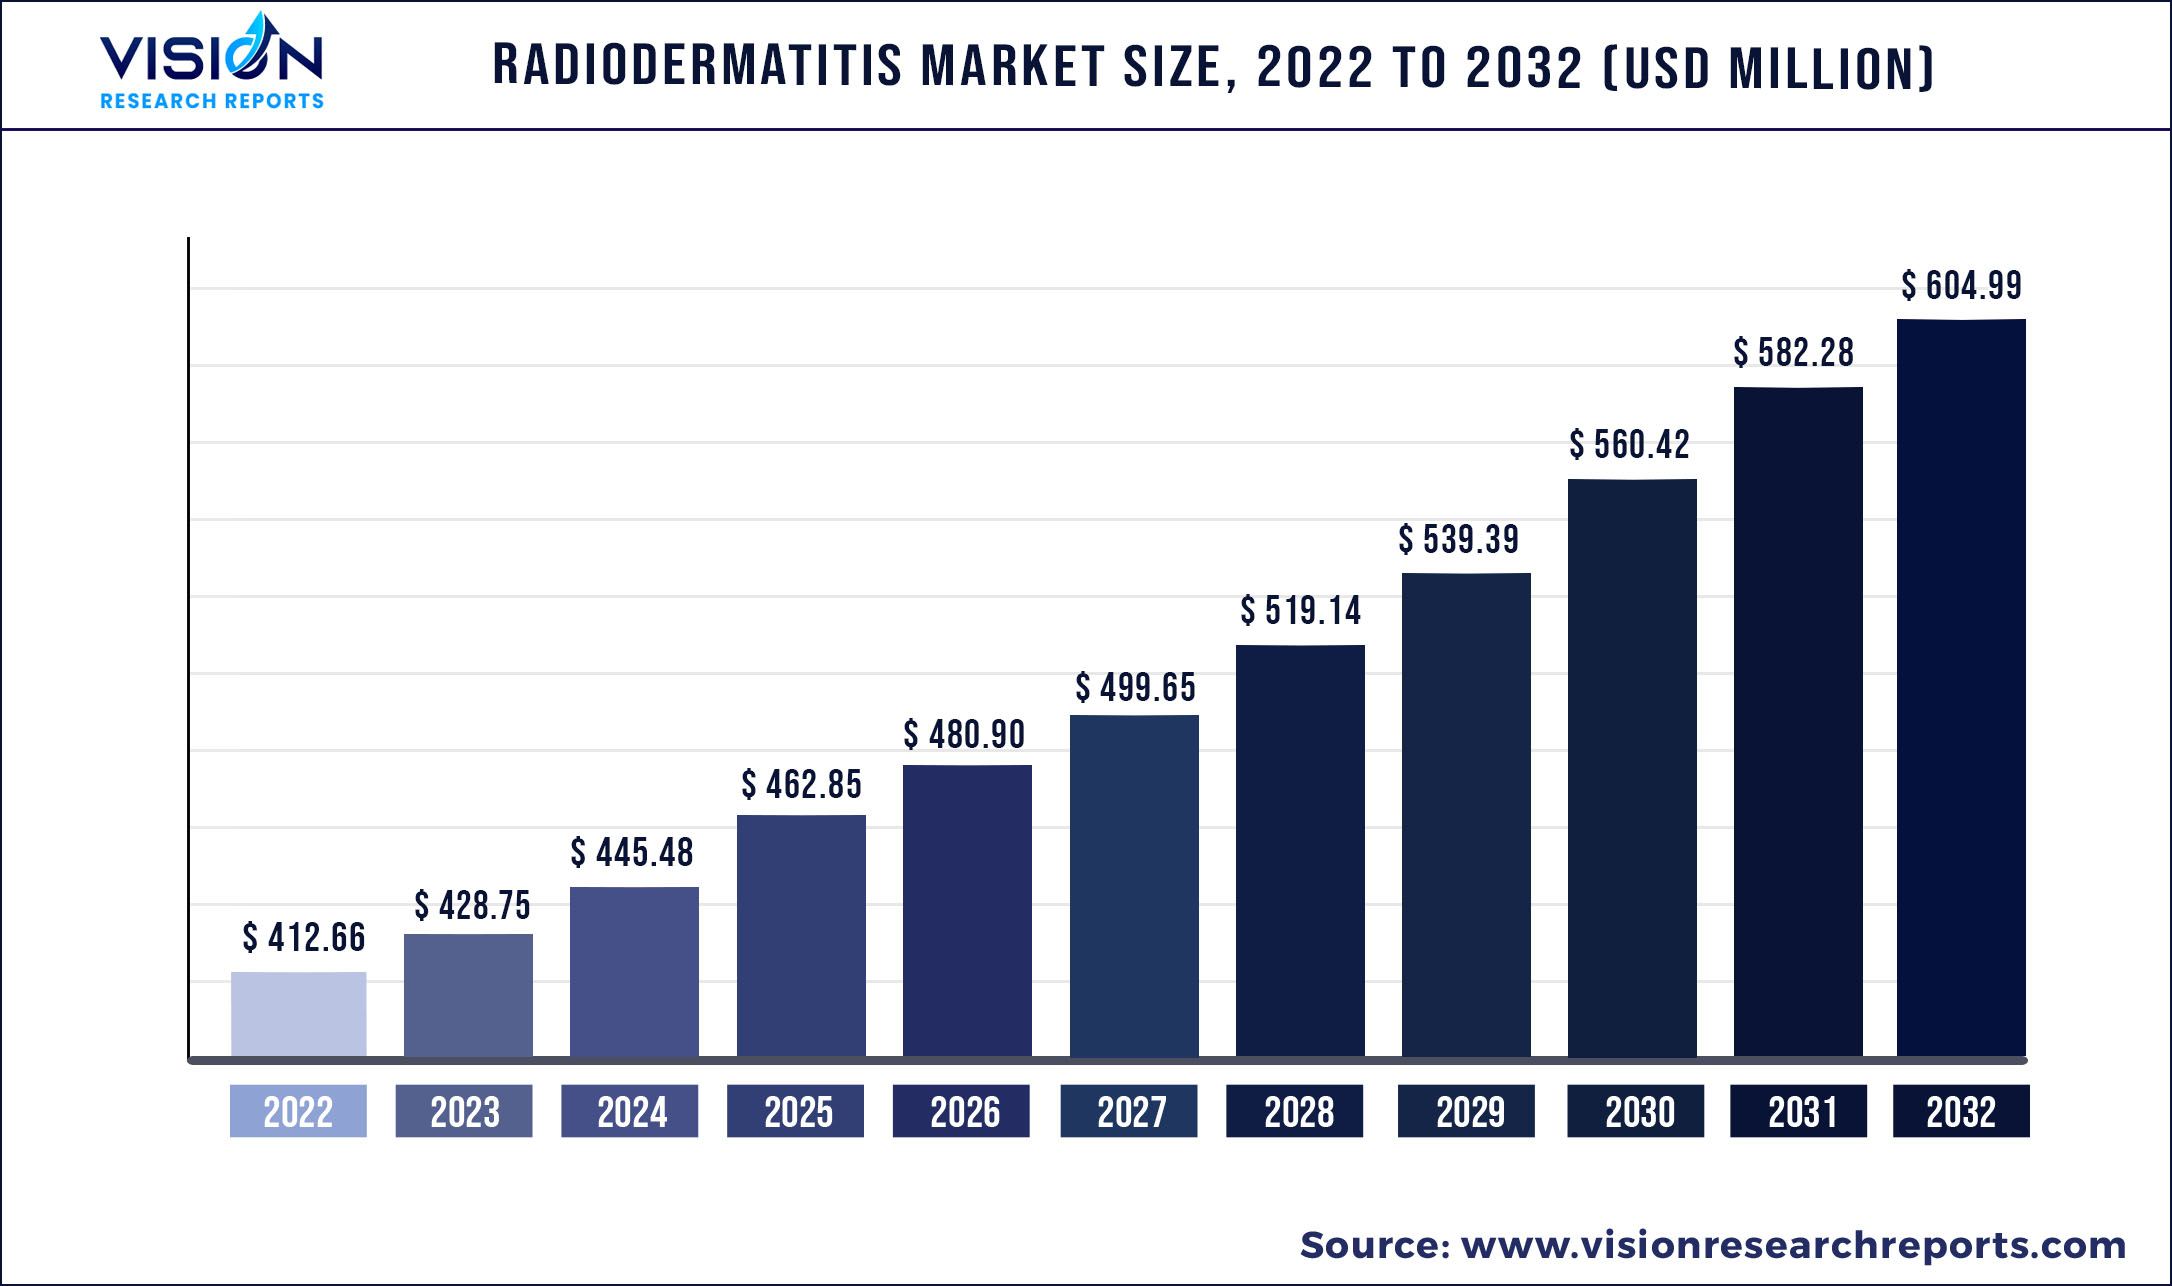 Radiodermatitis Market Size 2022 to 2032